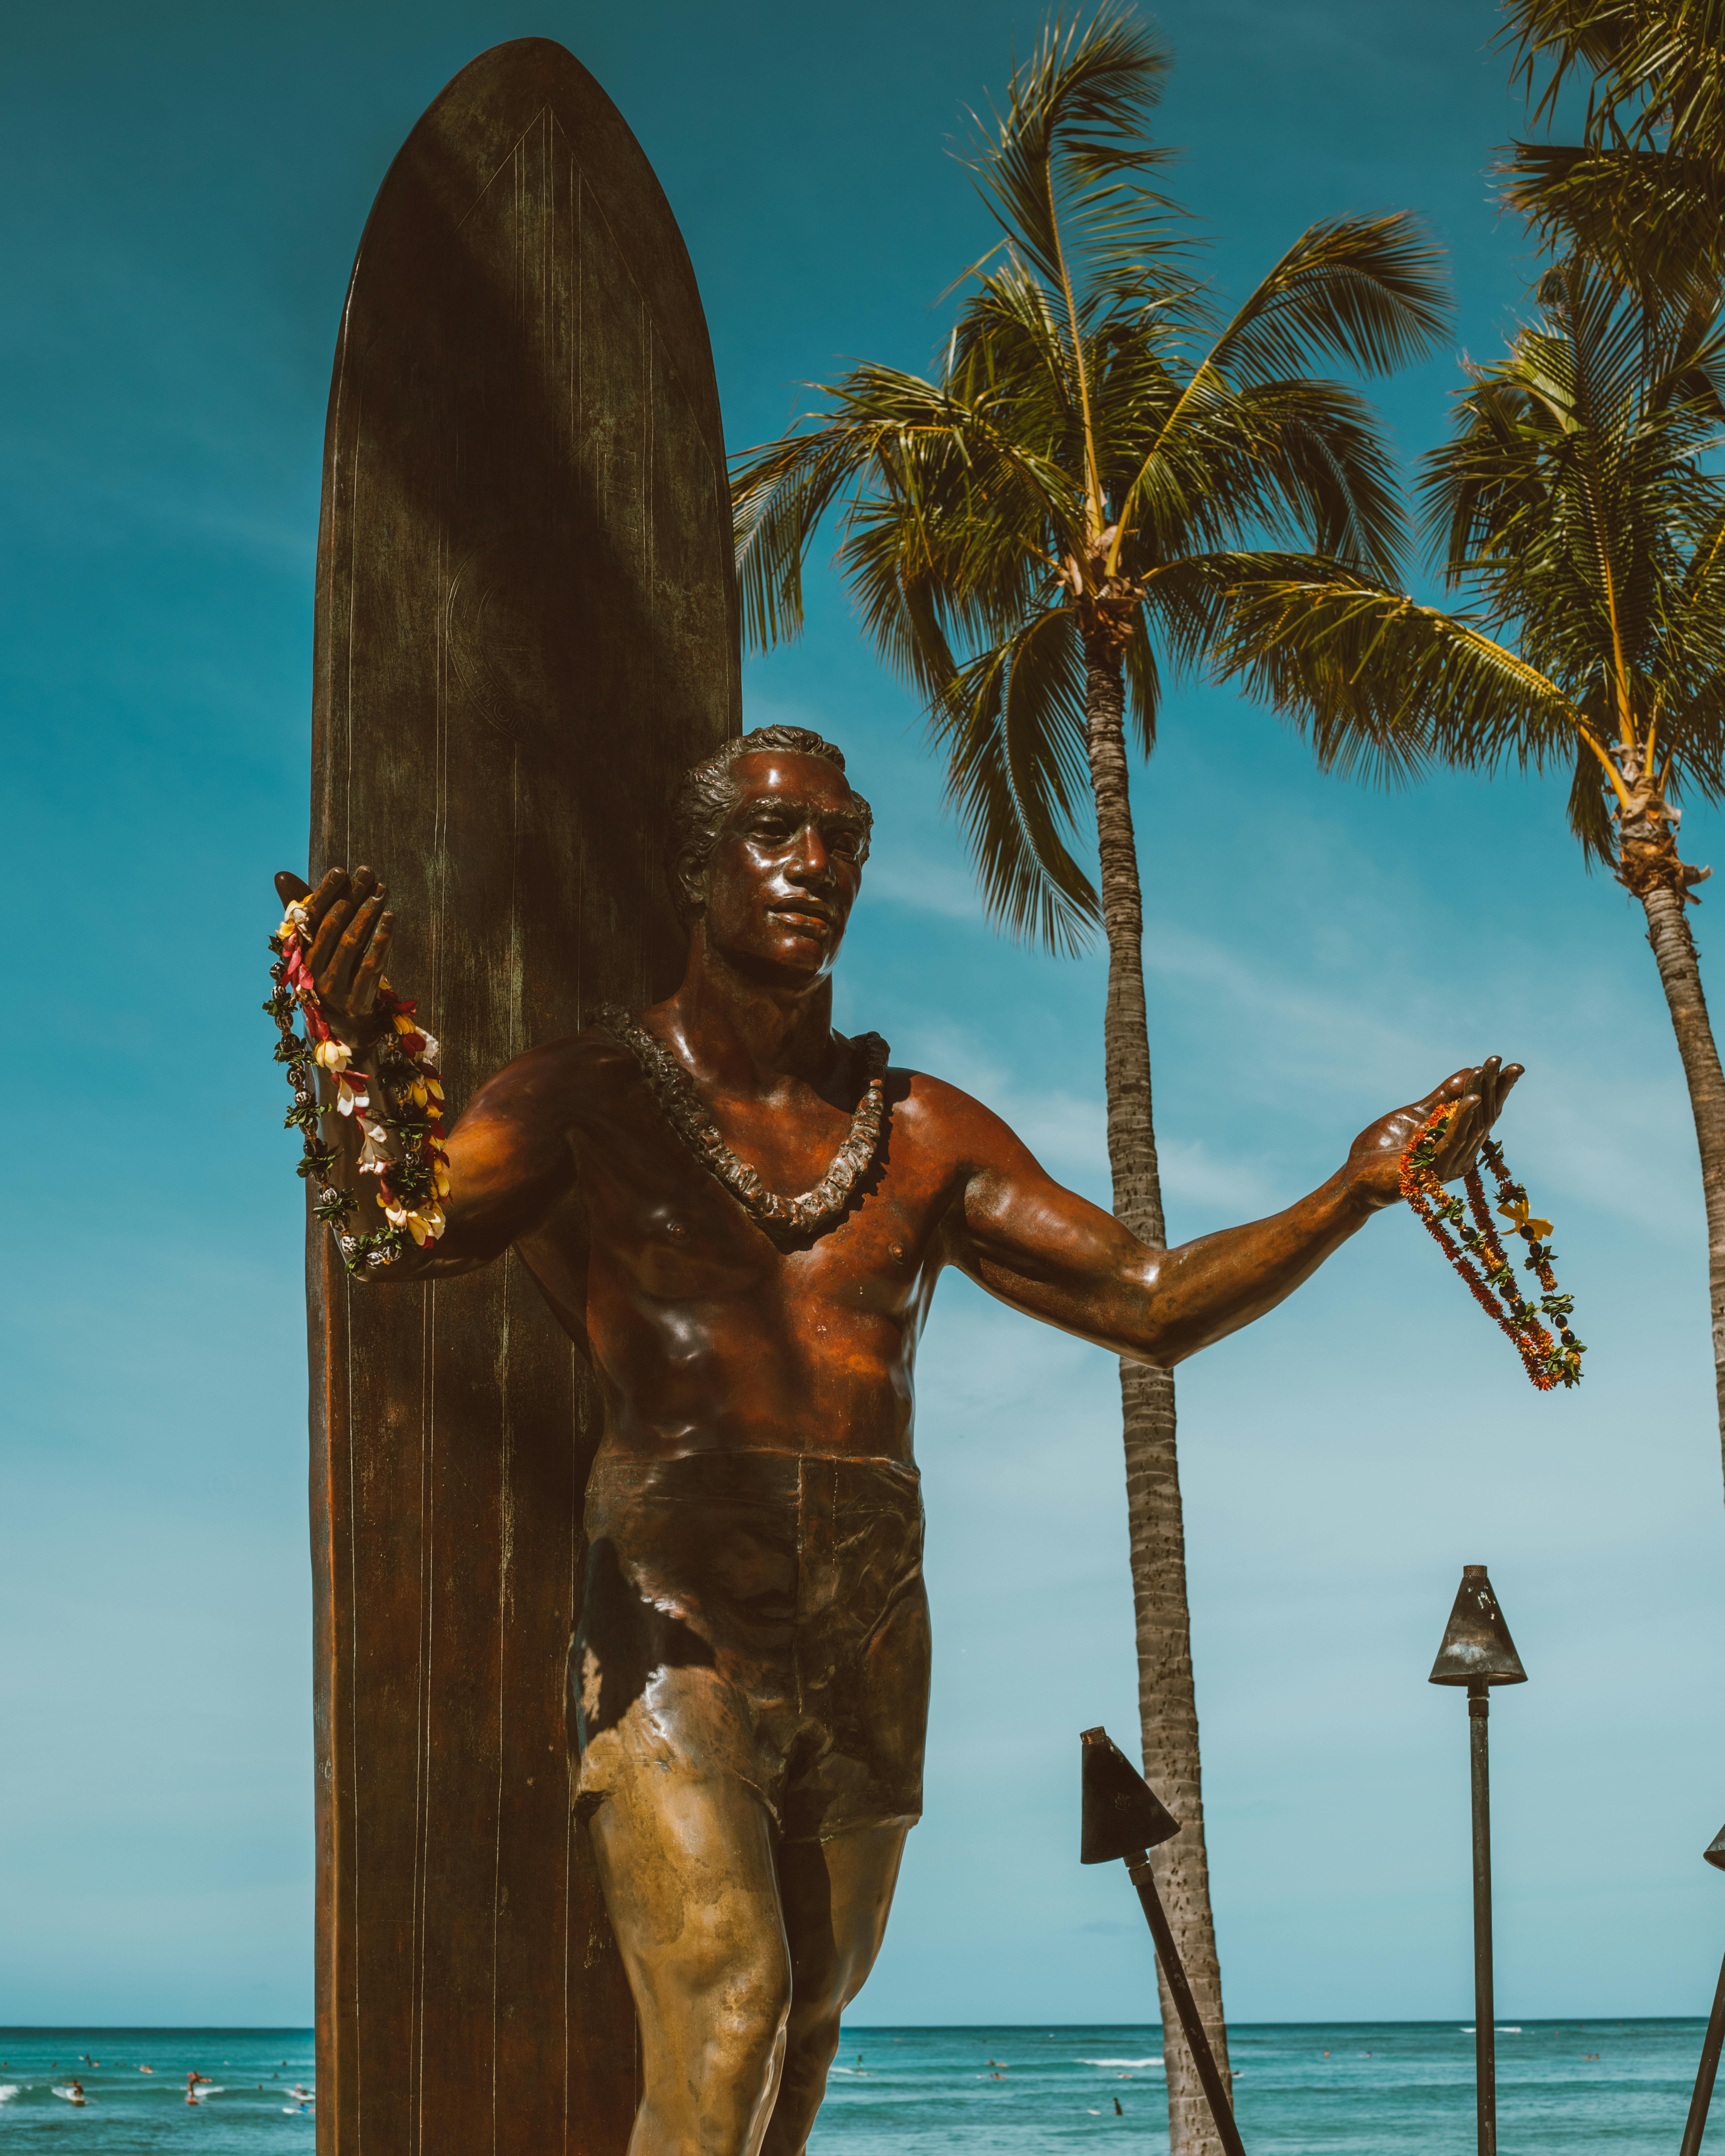 duke paoa kahanamoku statue in hawaii